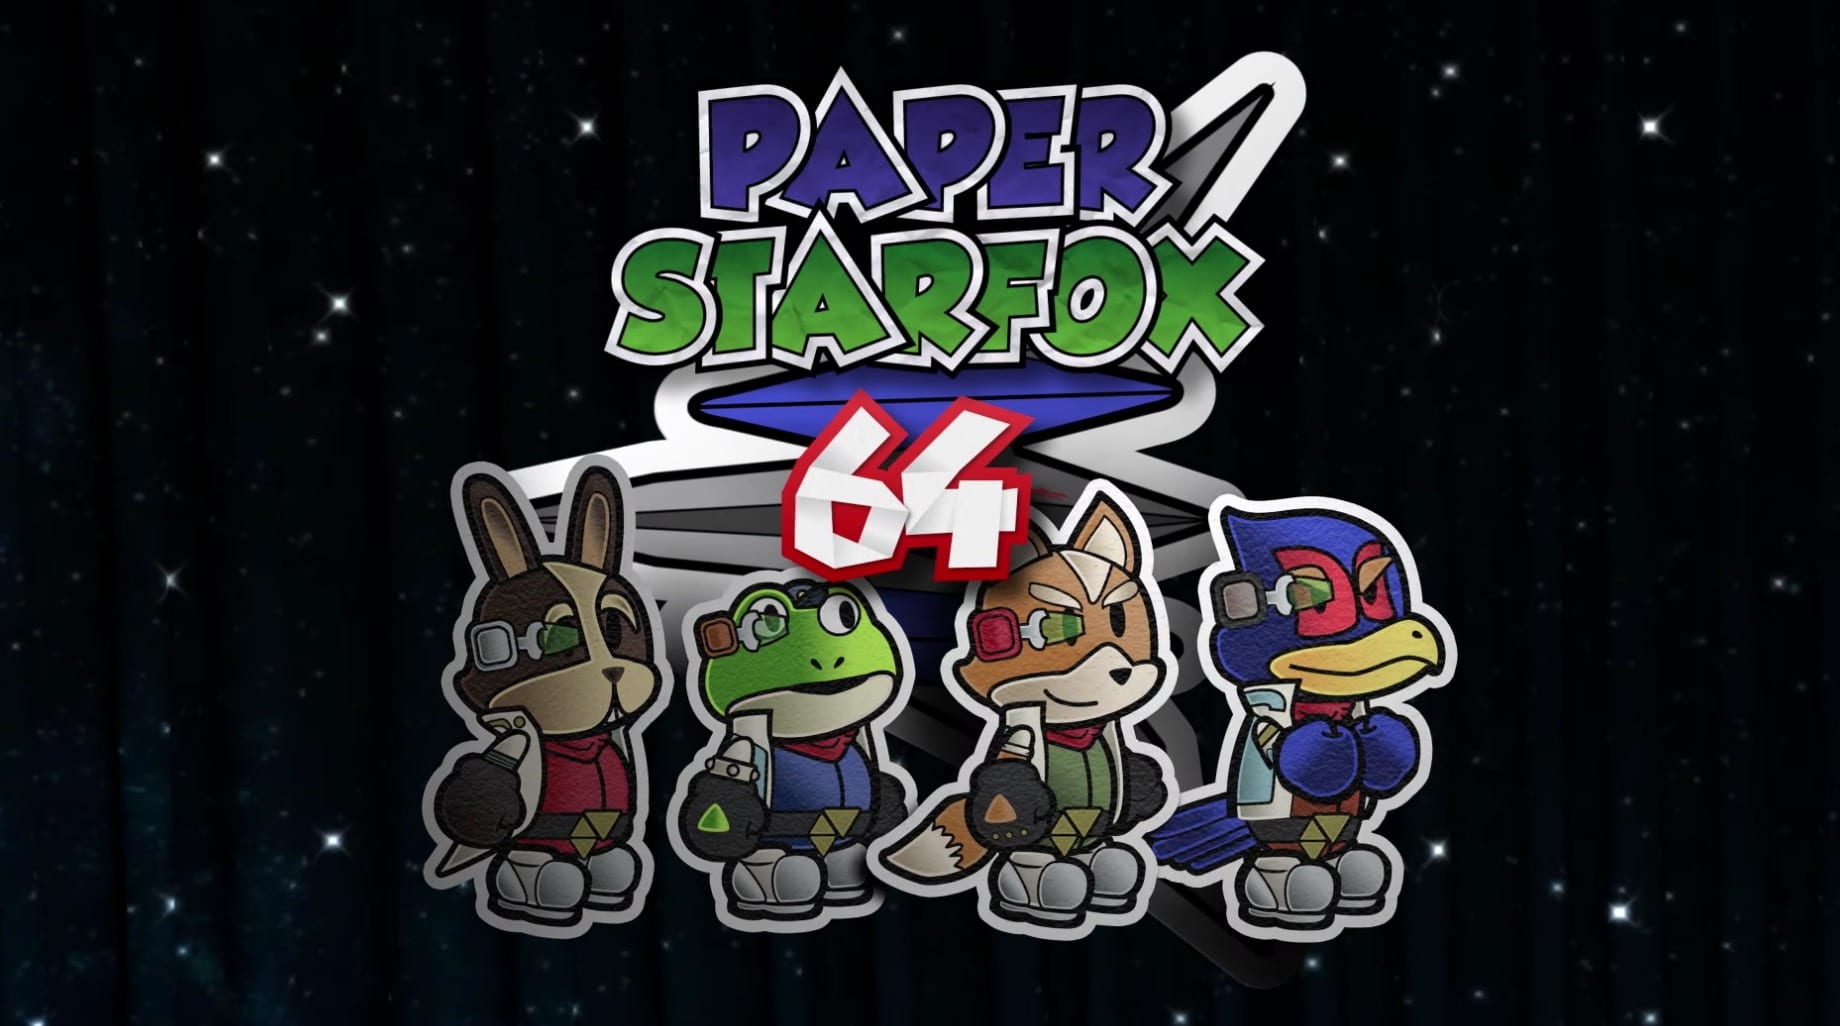 paper star fox 64